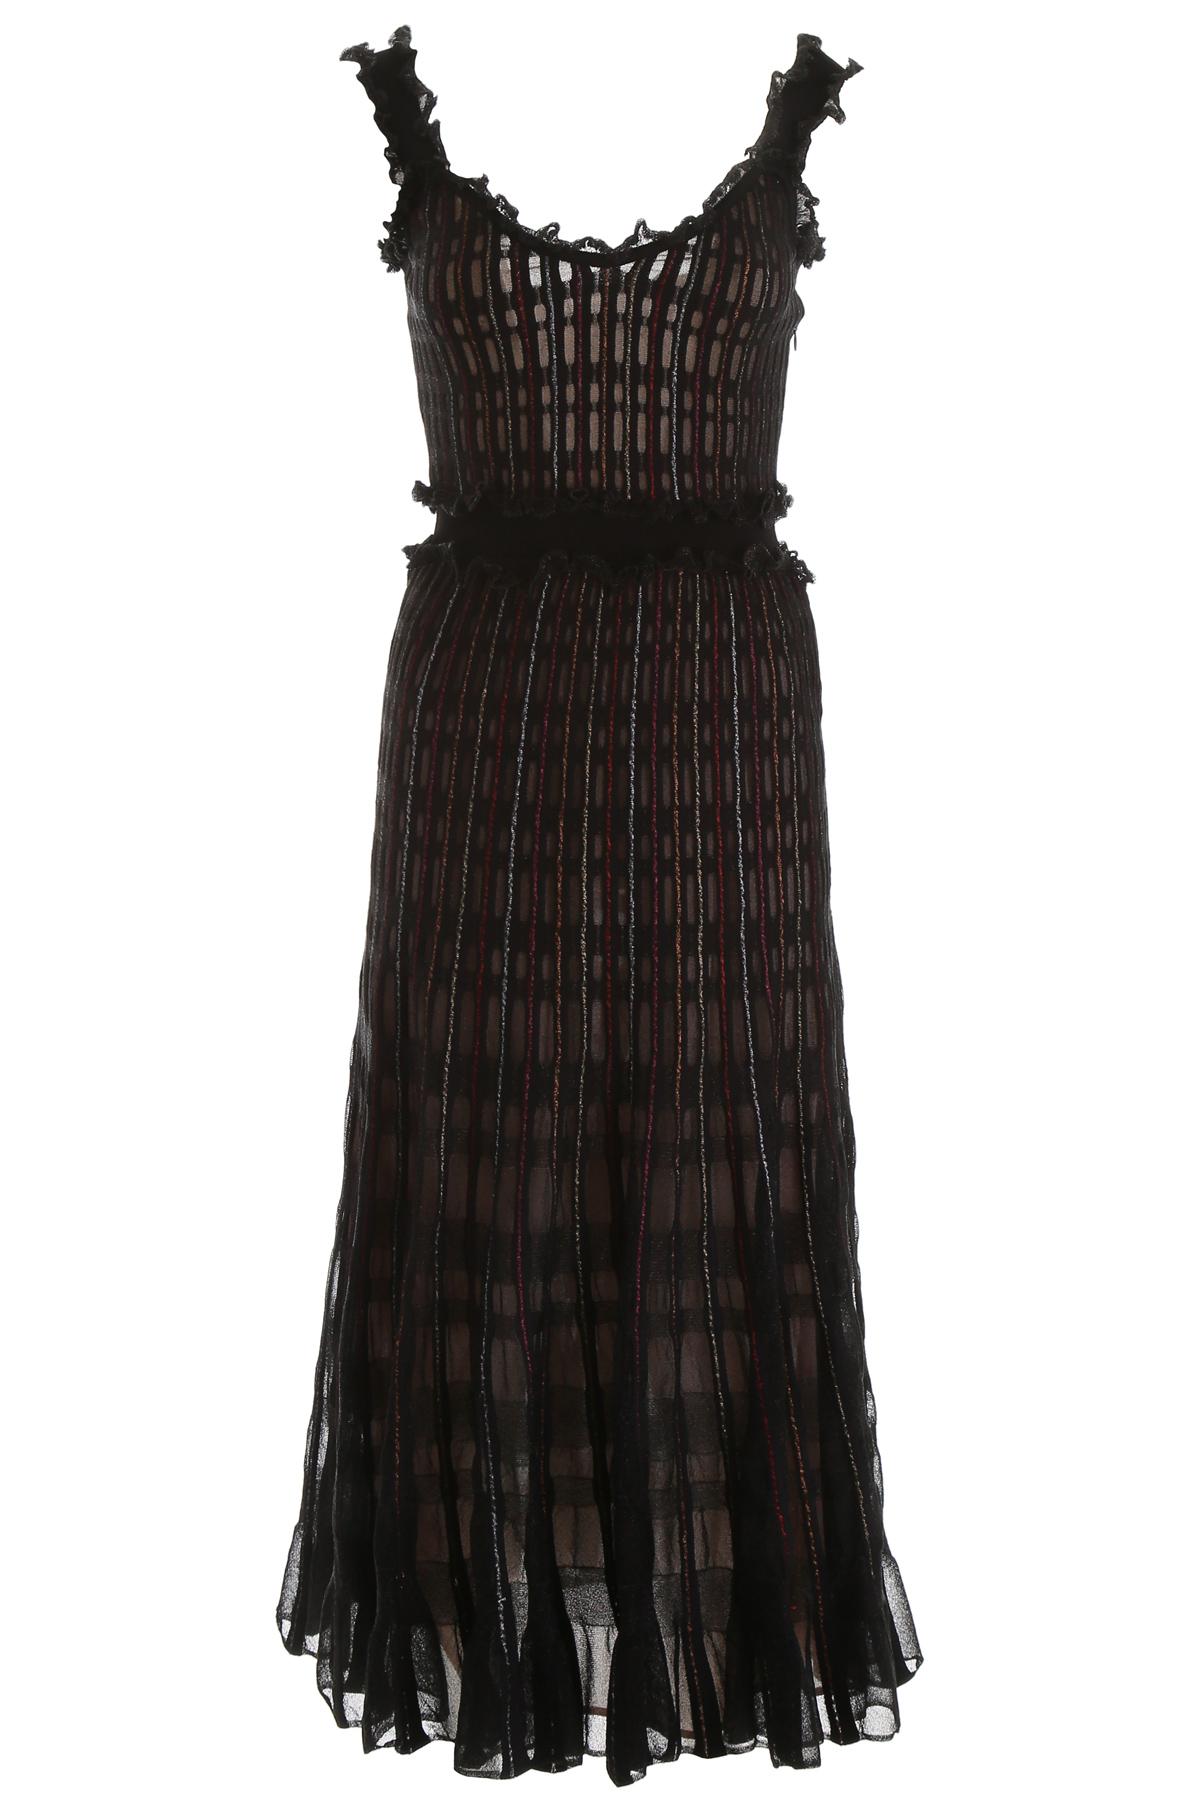 Alexander McQueen Silk Ruched Midi Dress in Black,Metallic (Black) - Lyst